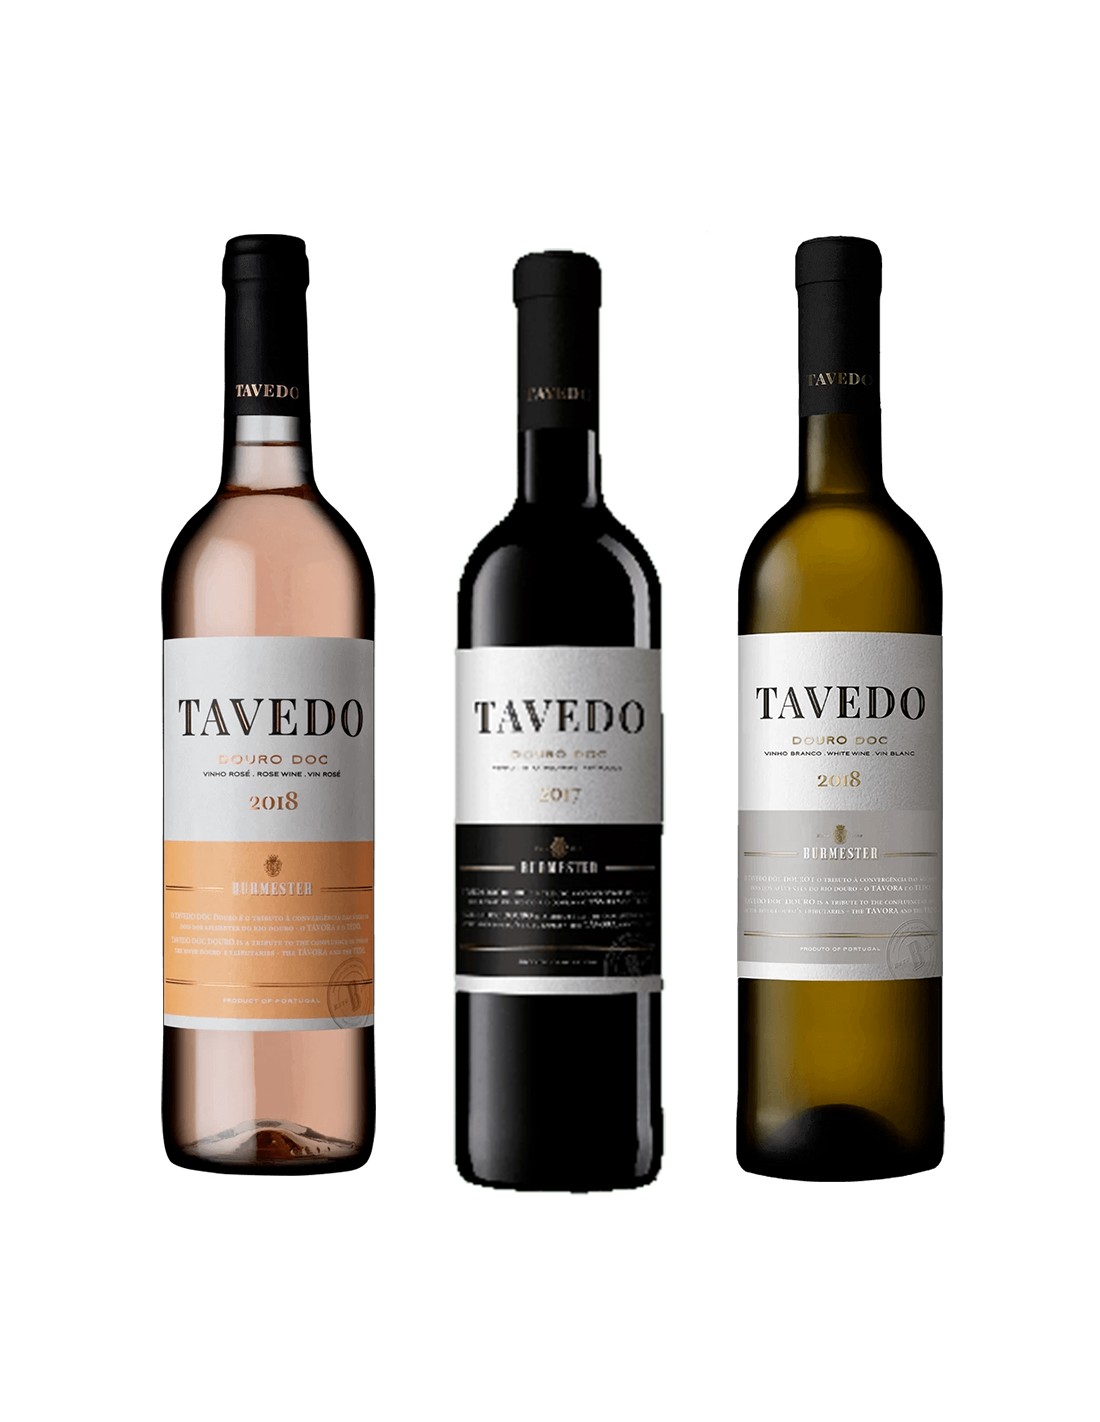 Pachet Tavedo Douro Portuguesse Wine Flavour alcooldiscount.ro